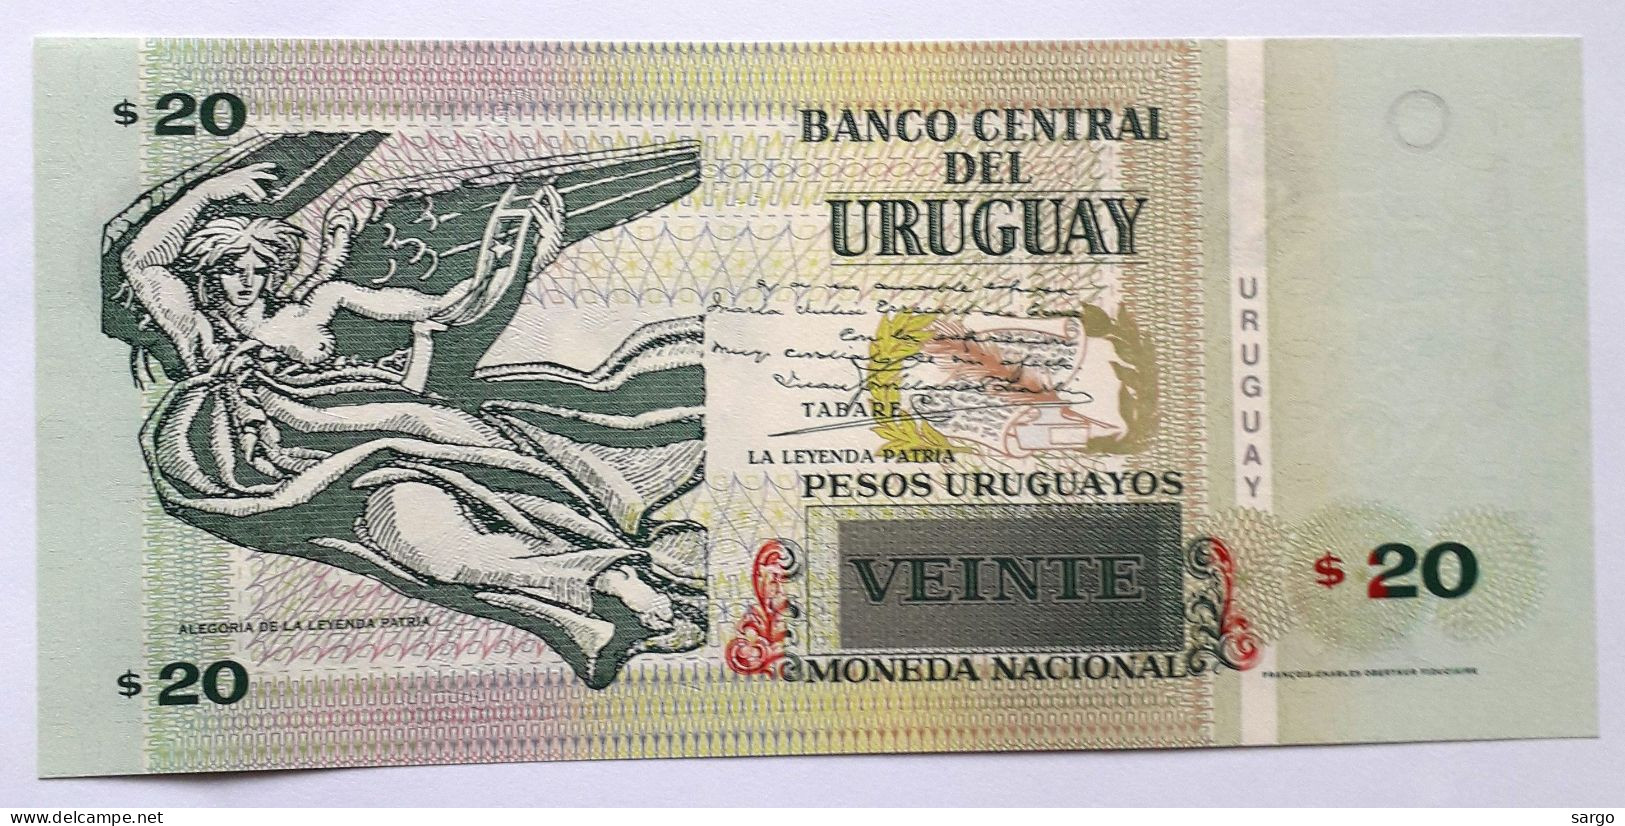 URUGUAY - 20 PESOS URUGUAYOS - P 86 A (2008)  - UNC - BANKNOTES - PAPER MONEY - CARTAMONETA - - Turkmenistan